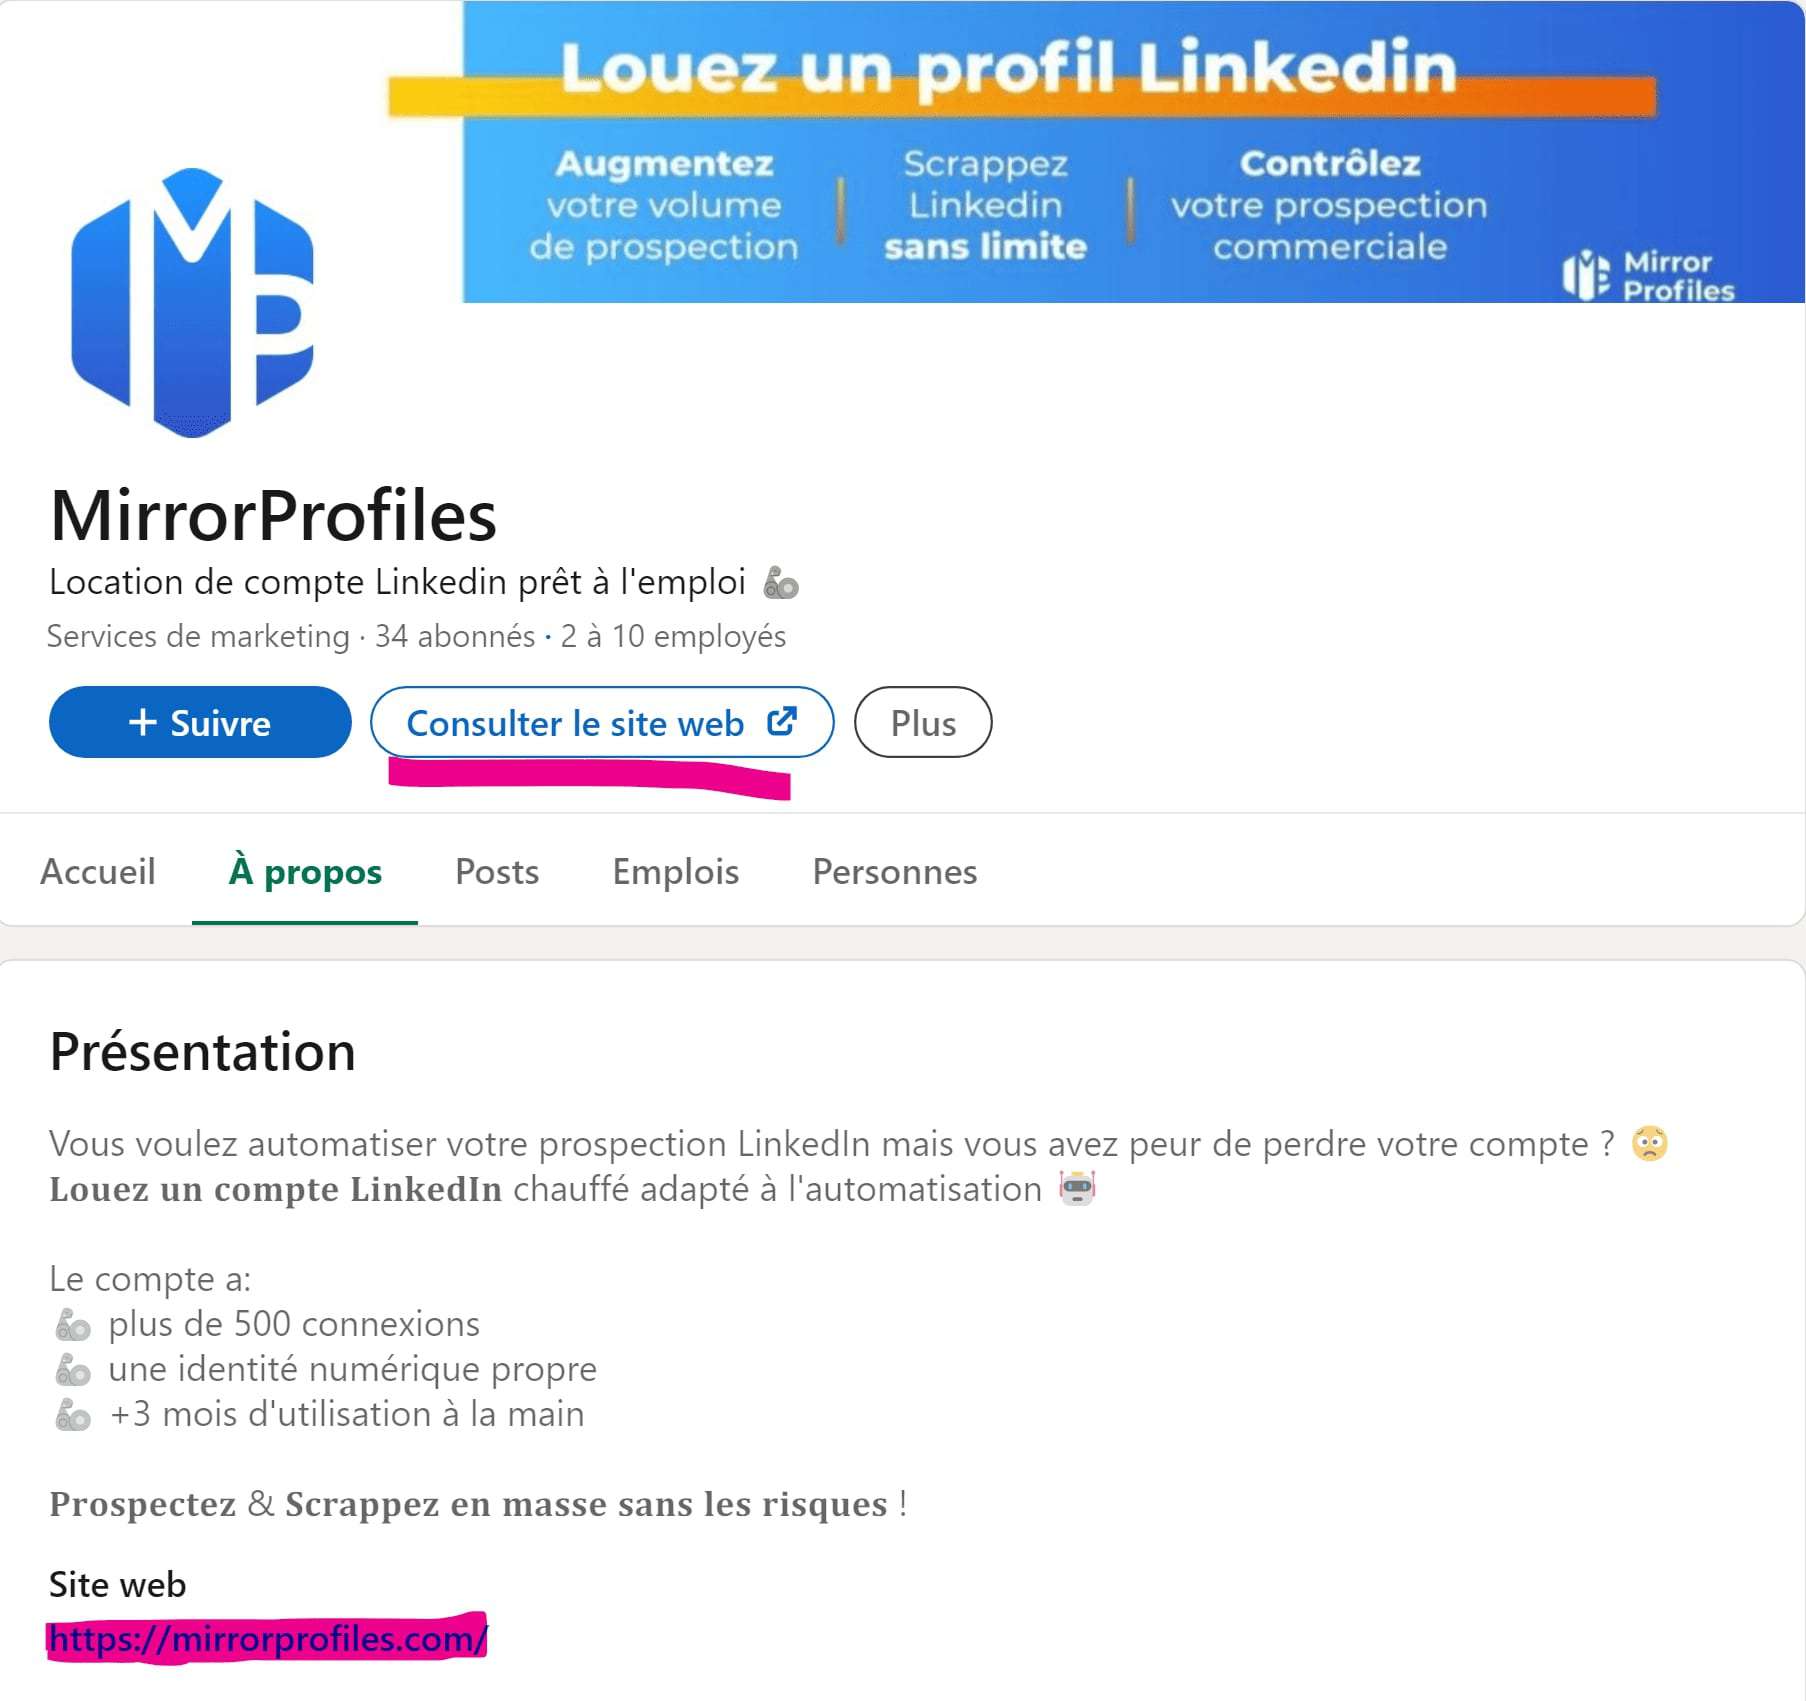 Page linkedIn MirrorProfiles